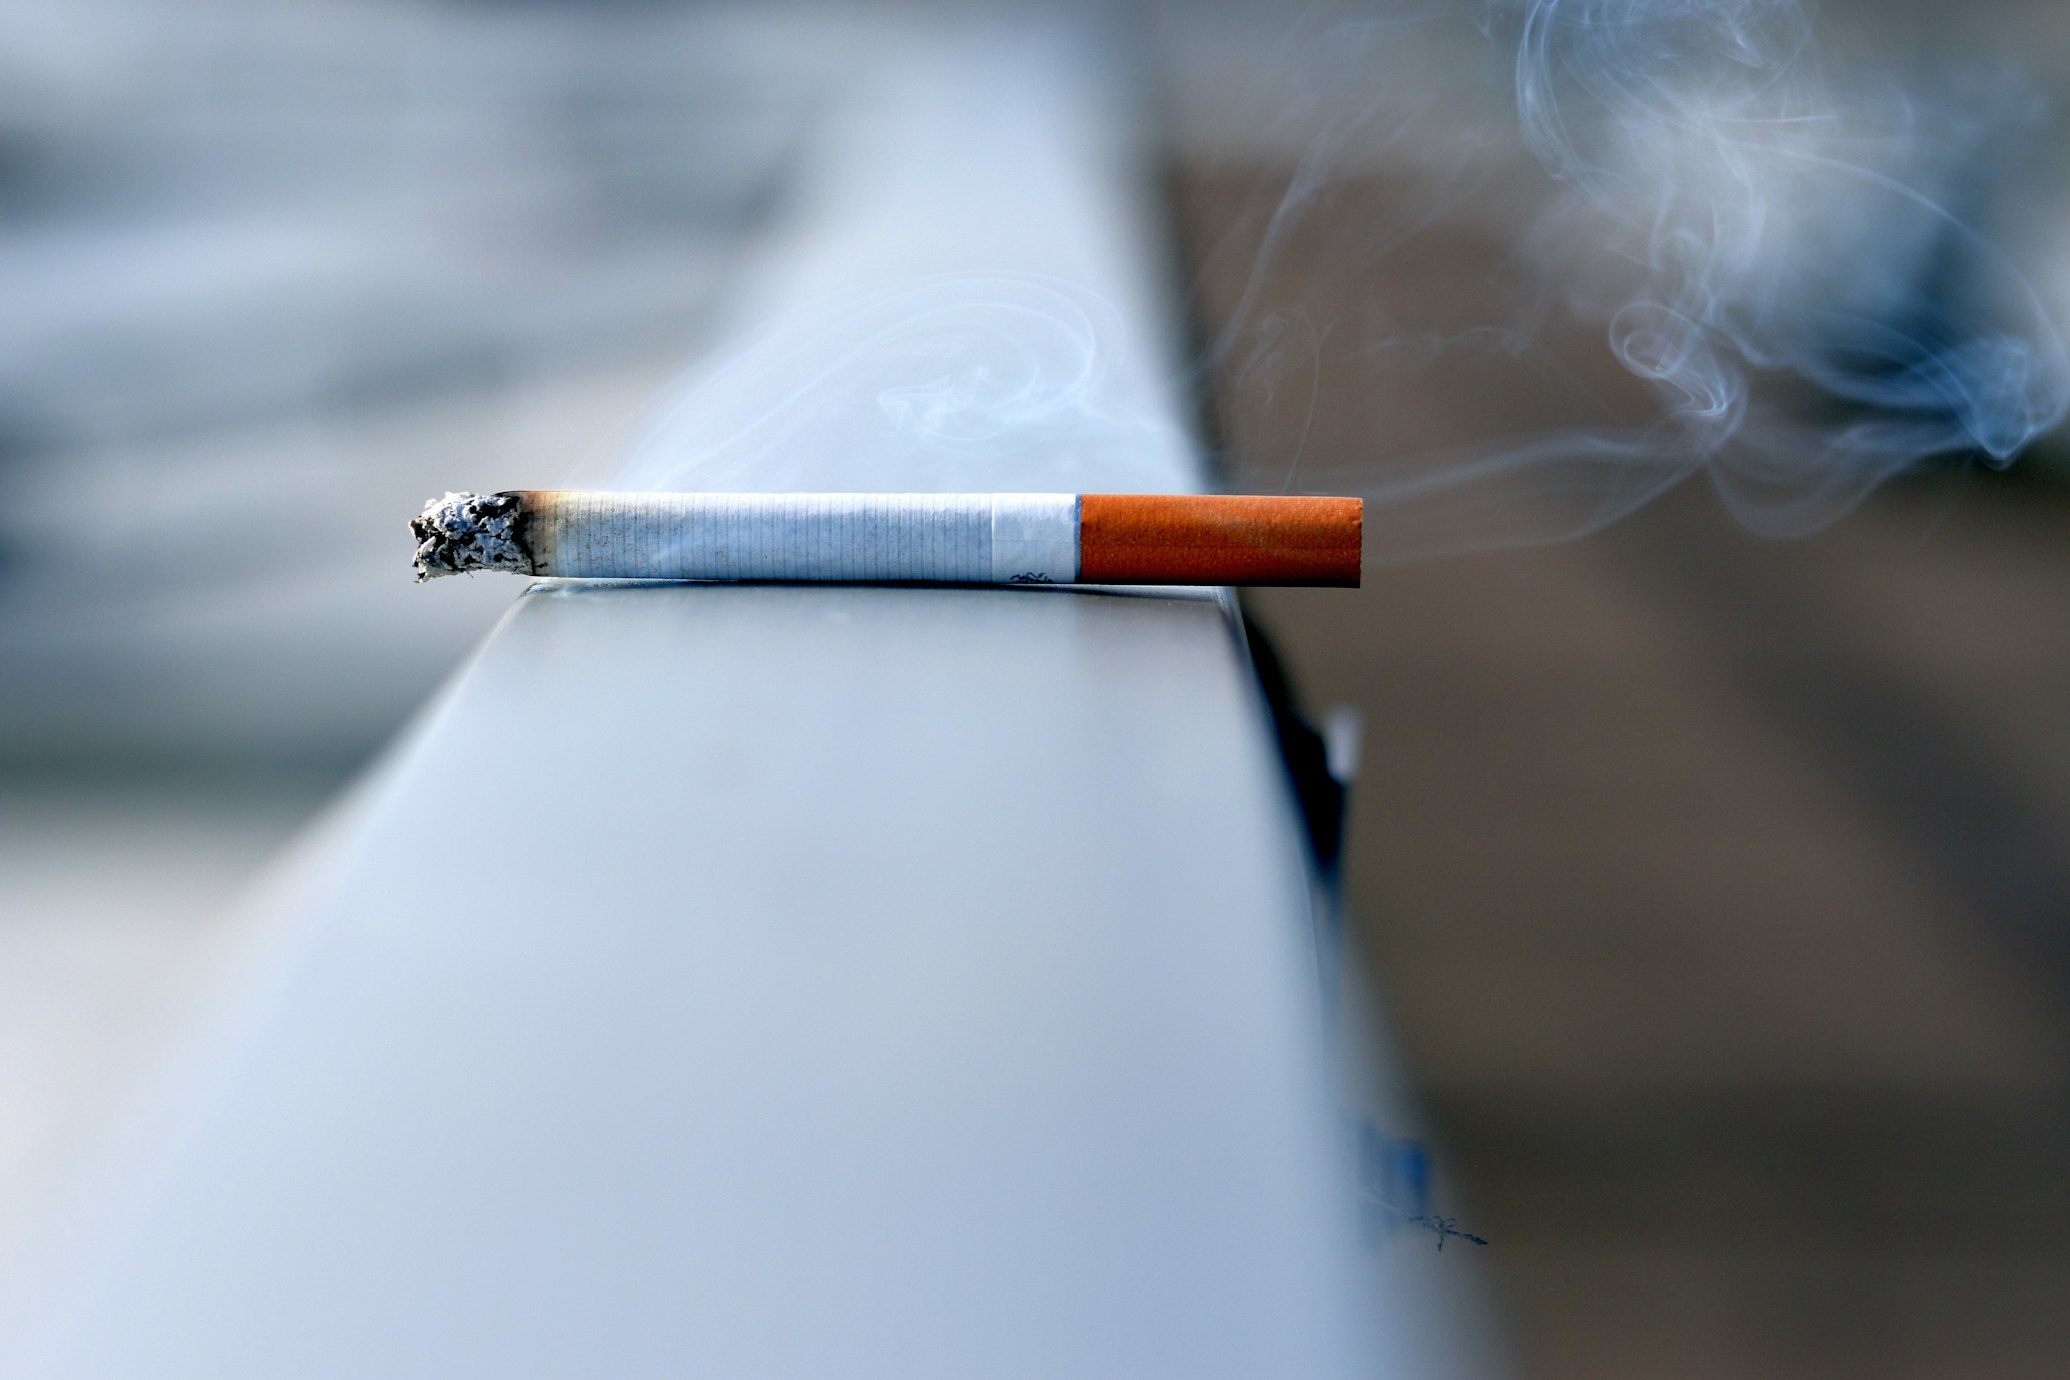 Merokok dapat mempersempit aliran darah